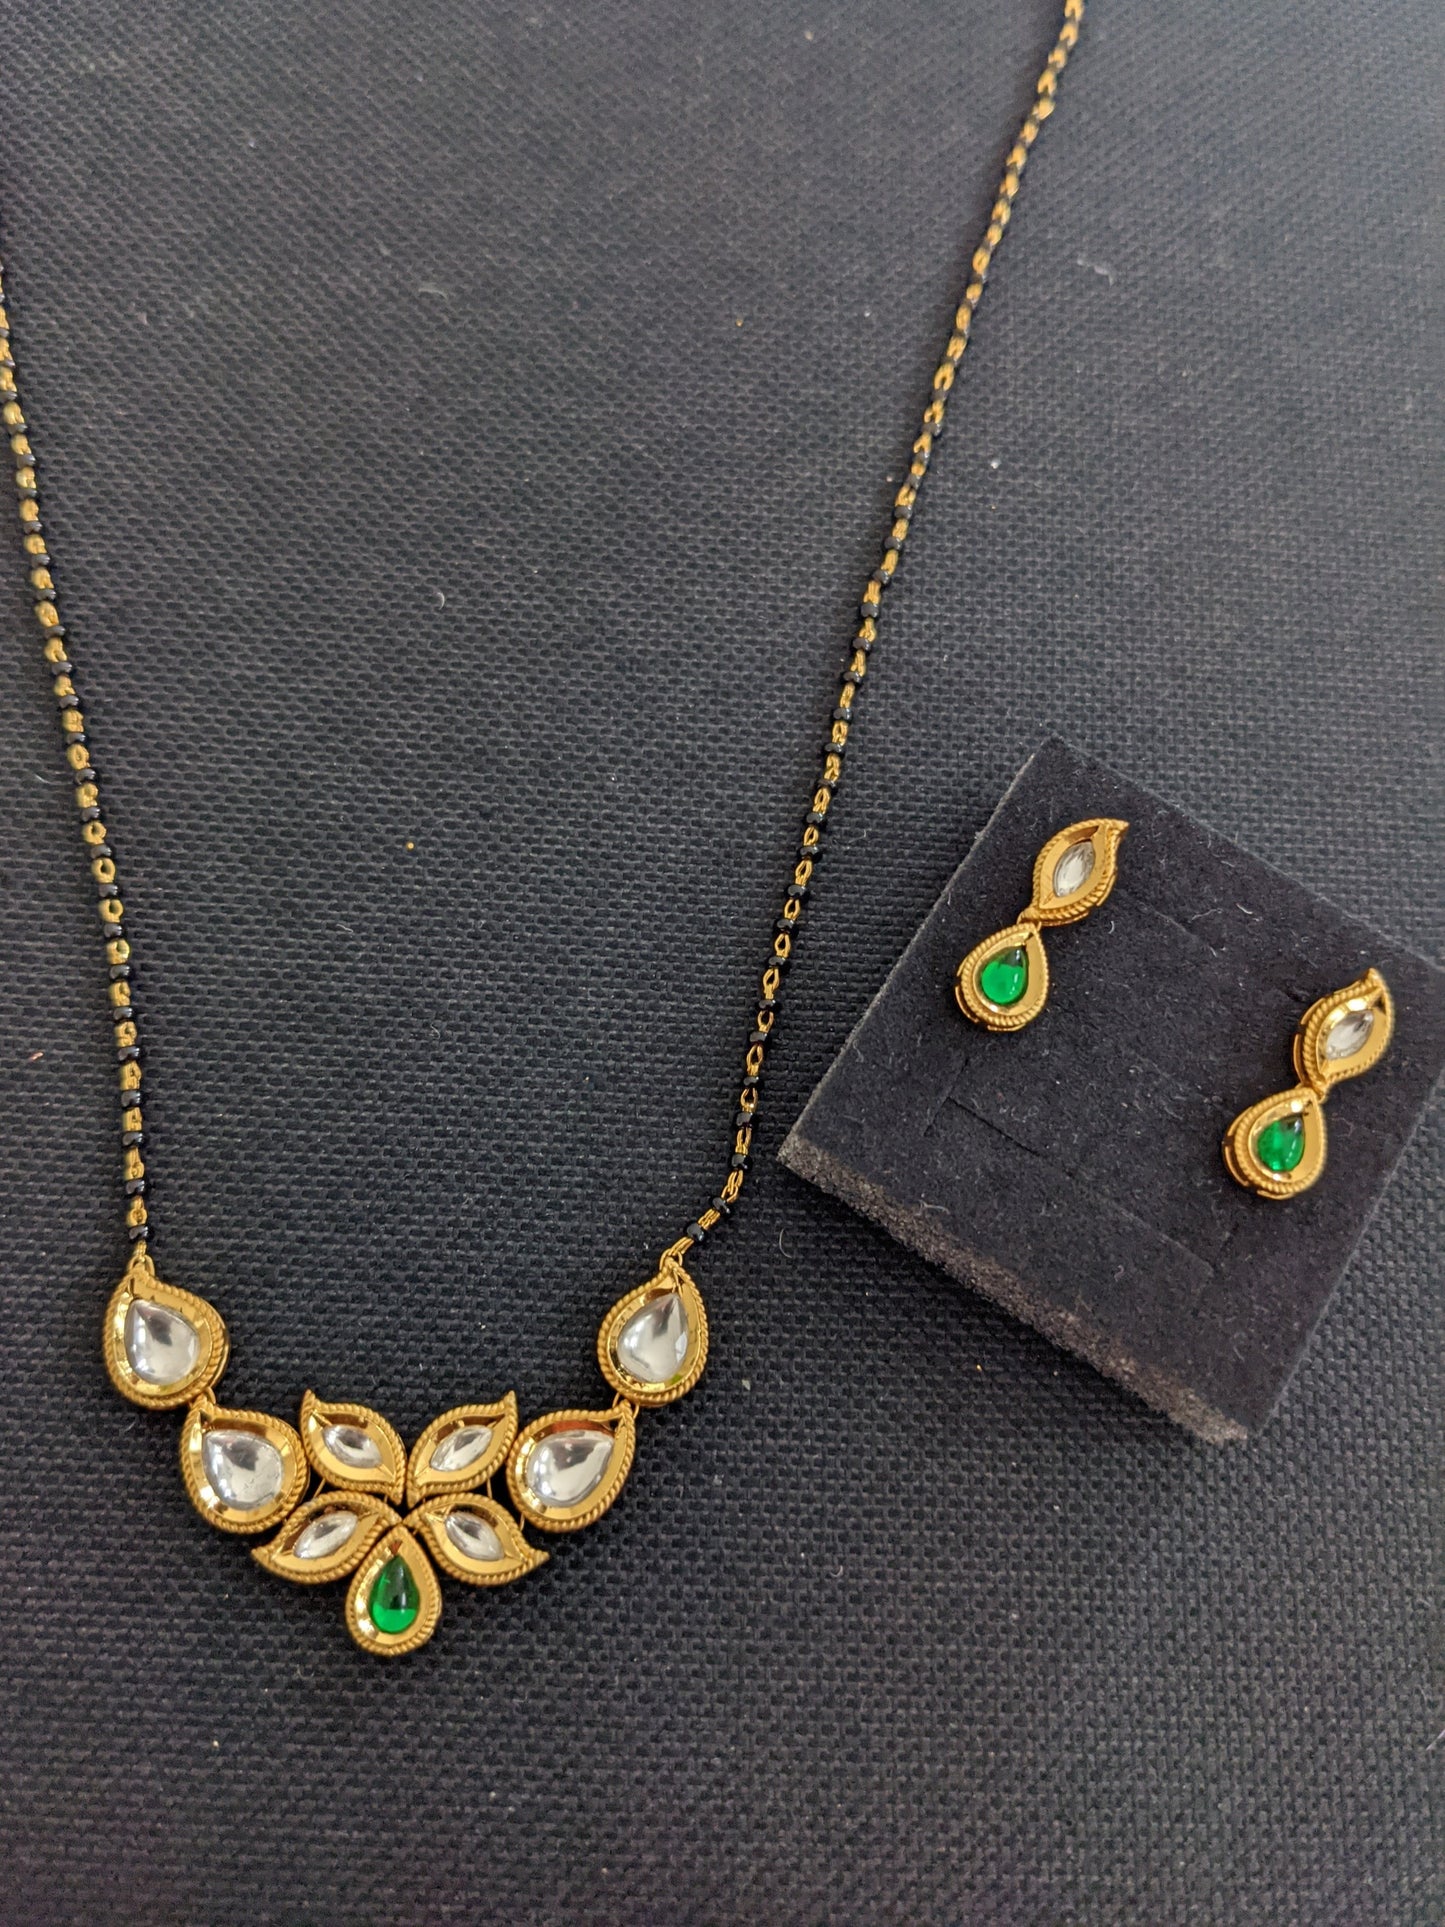 Mangalsutra - Kundan Pendant and Earrings set - Single strand chain - Design 3